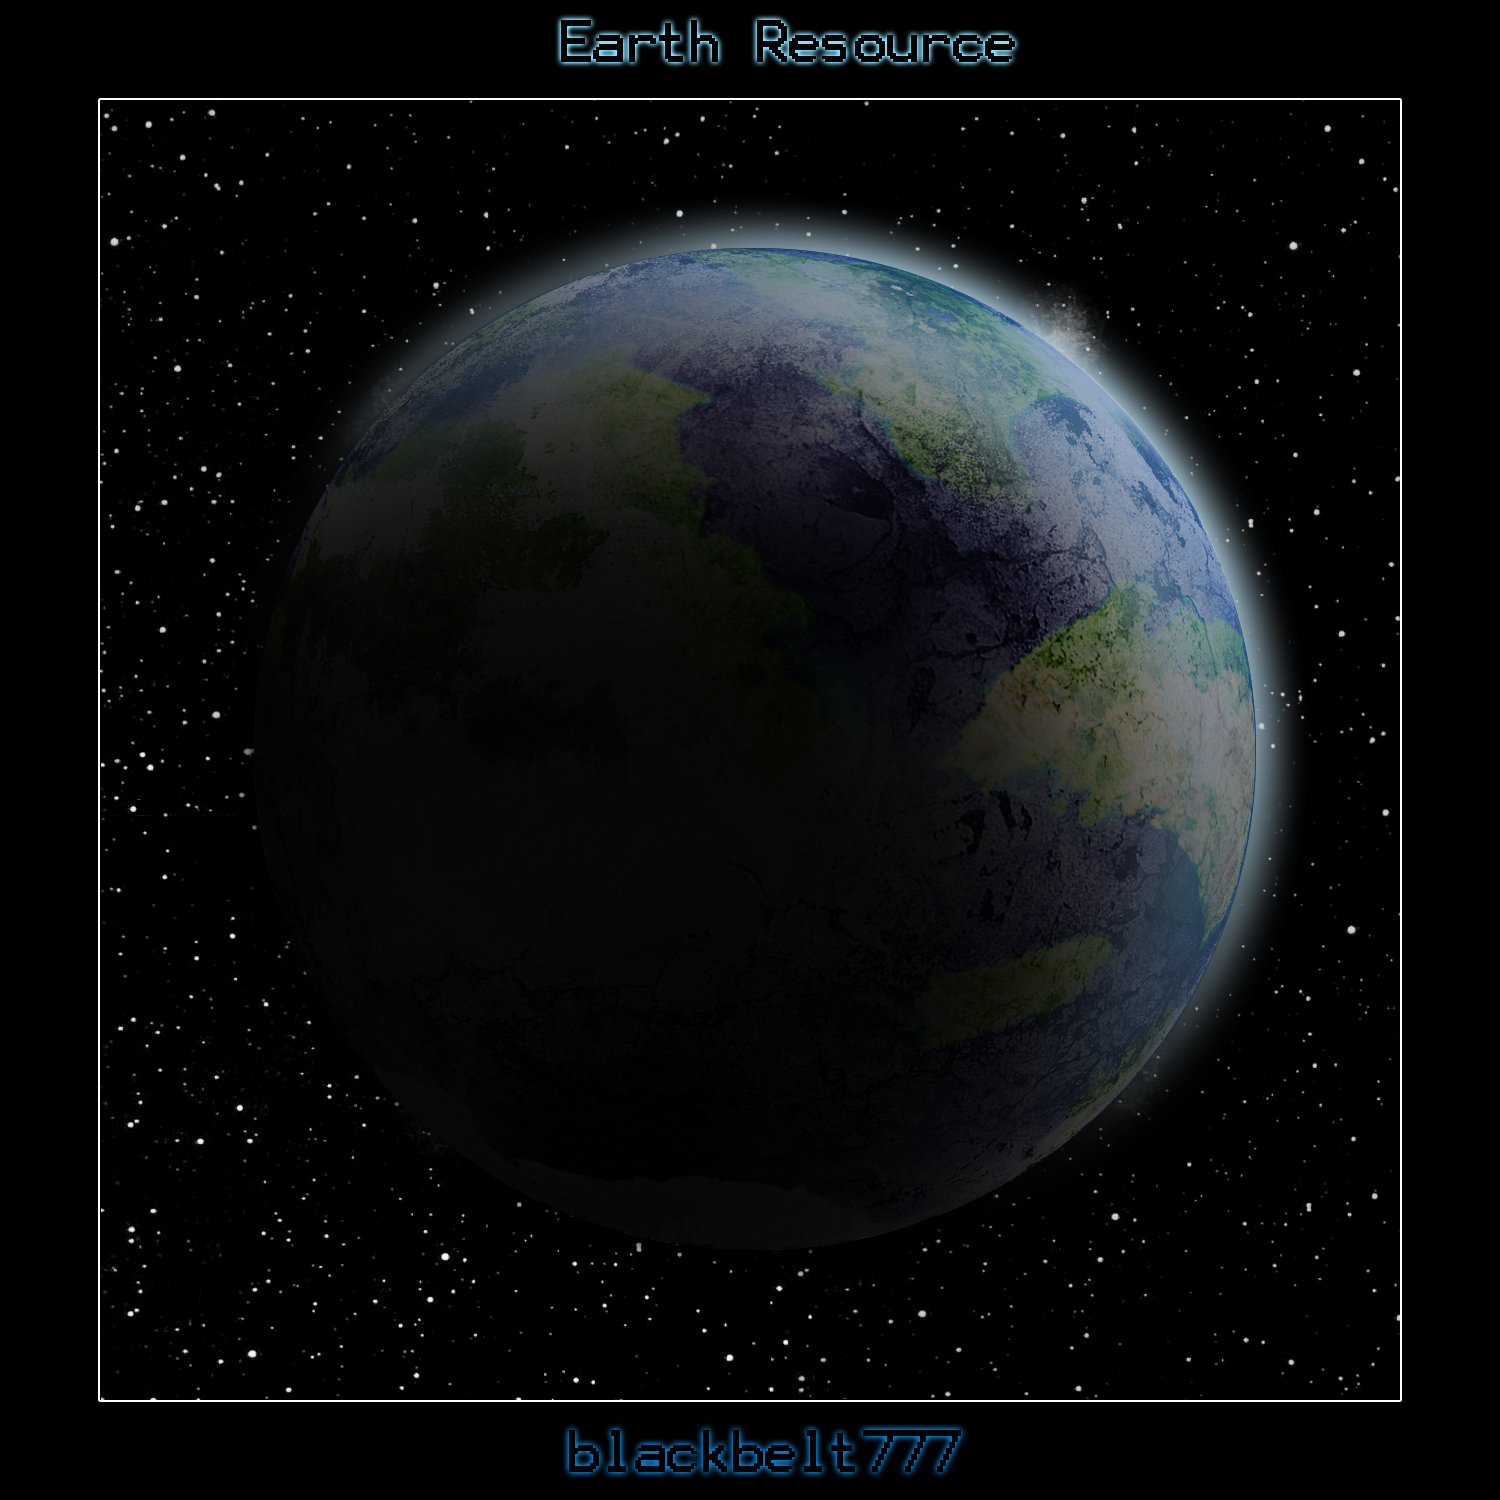 Earth Resource